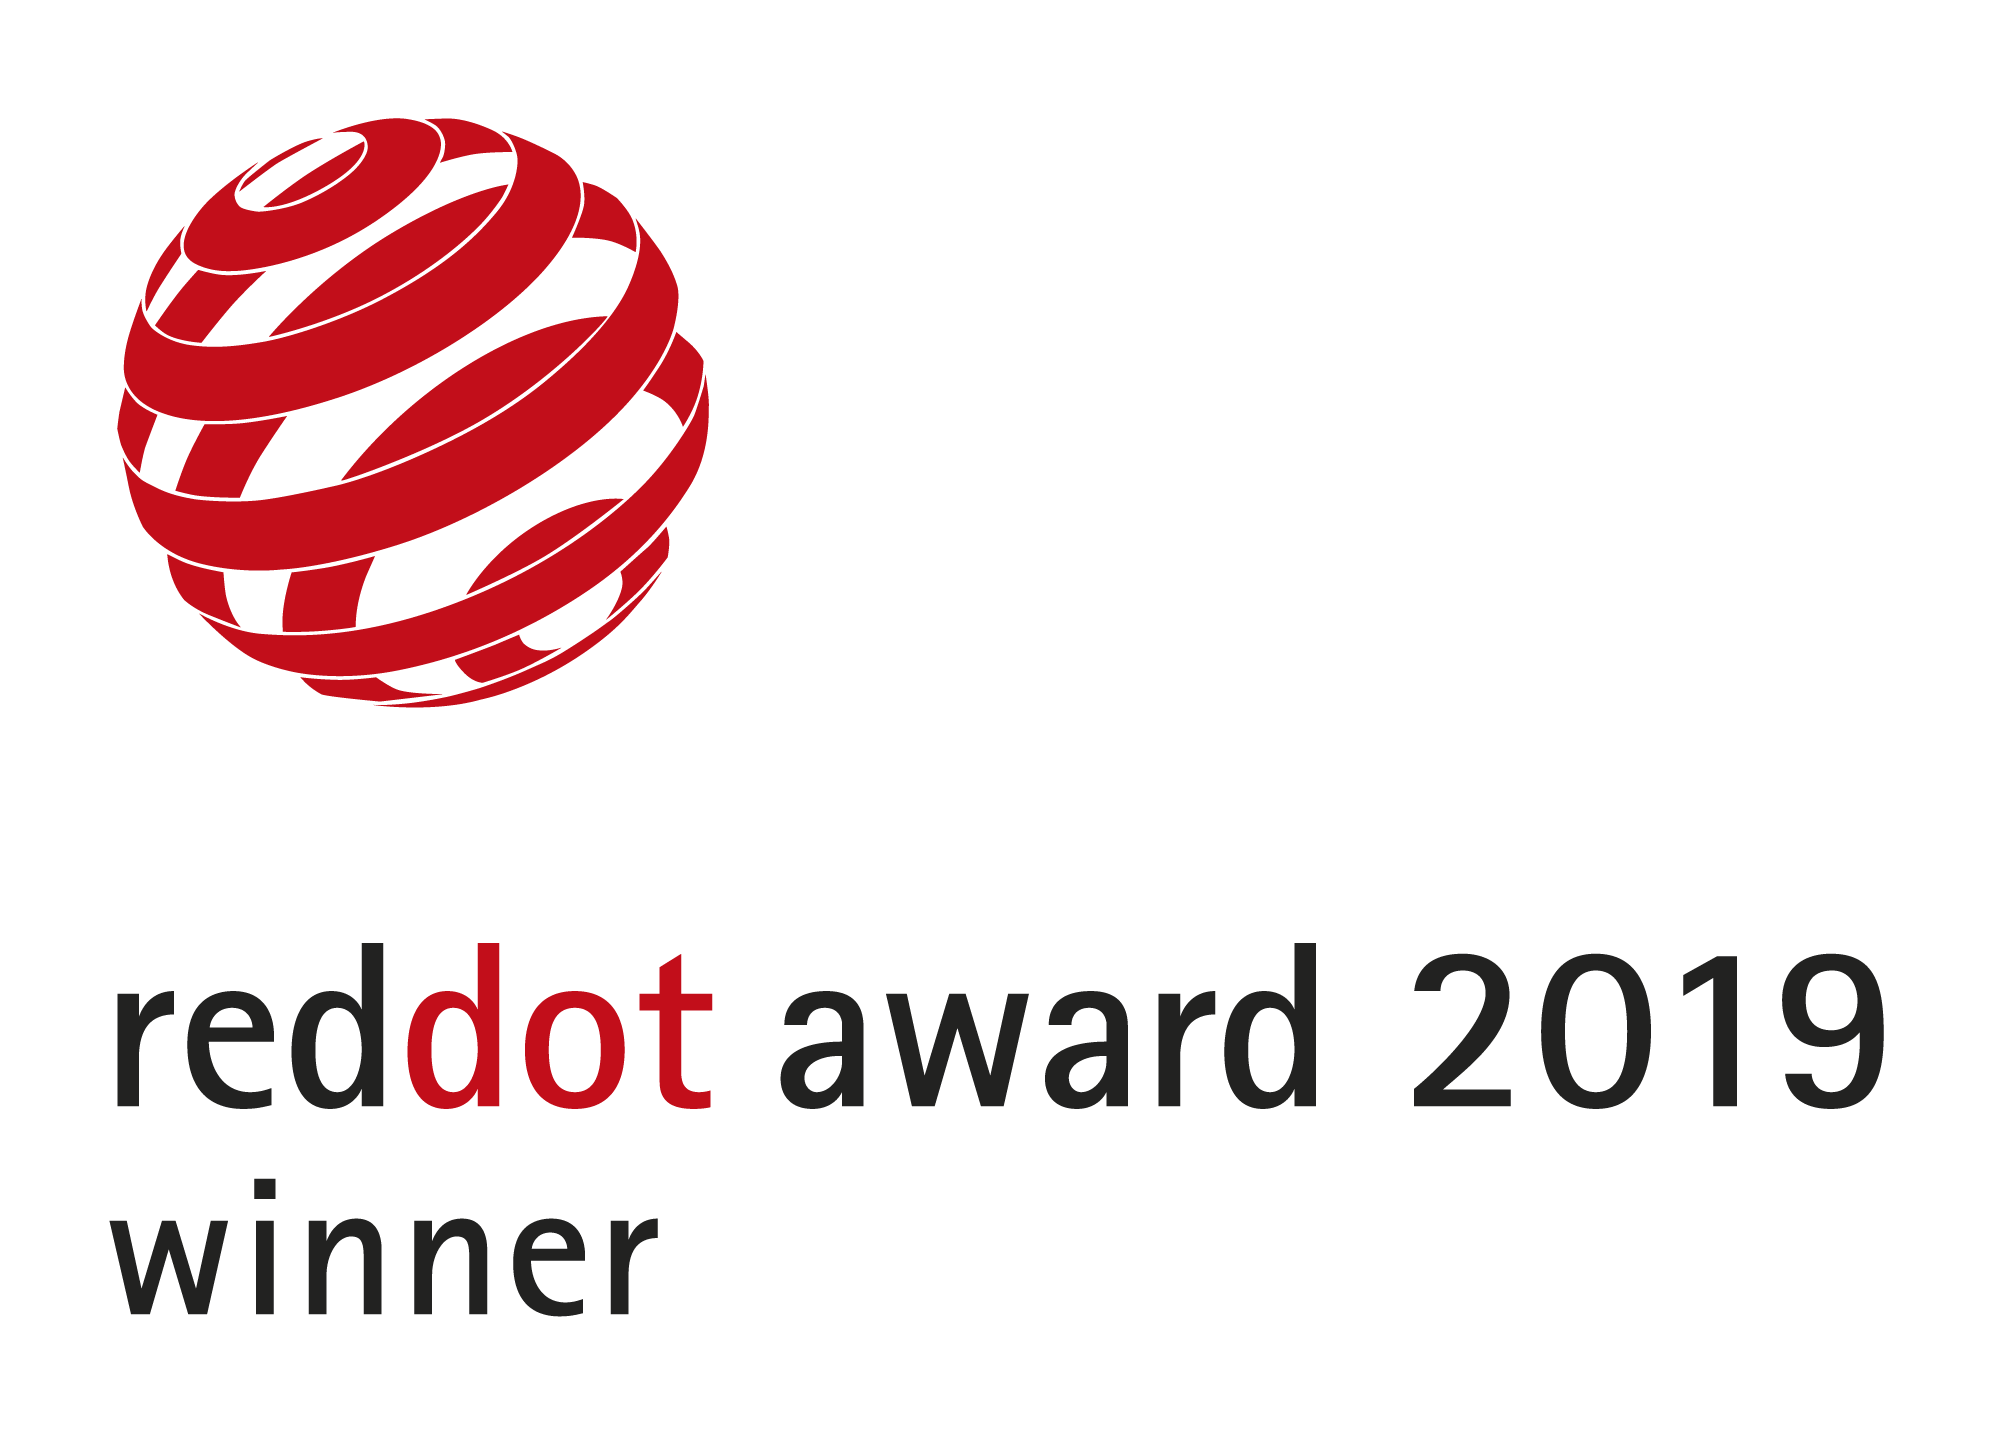 Reddot Award 2019